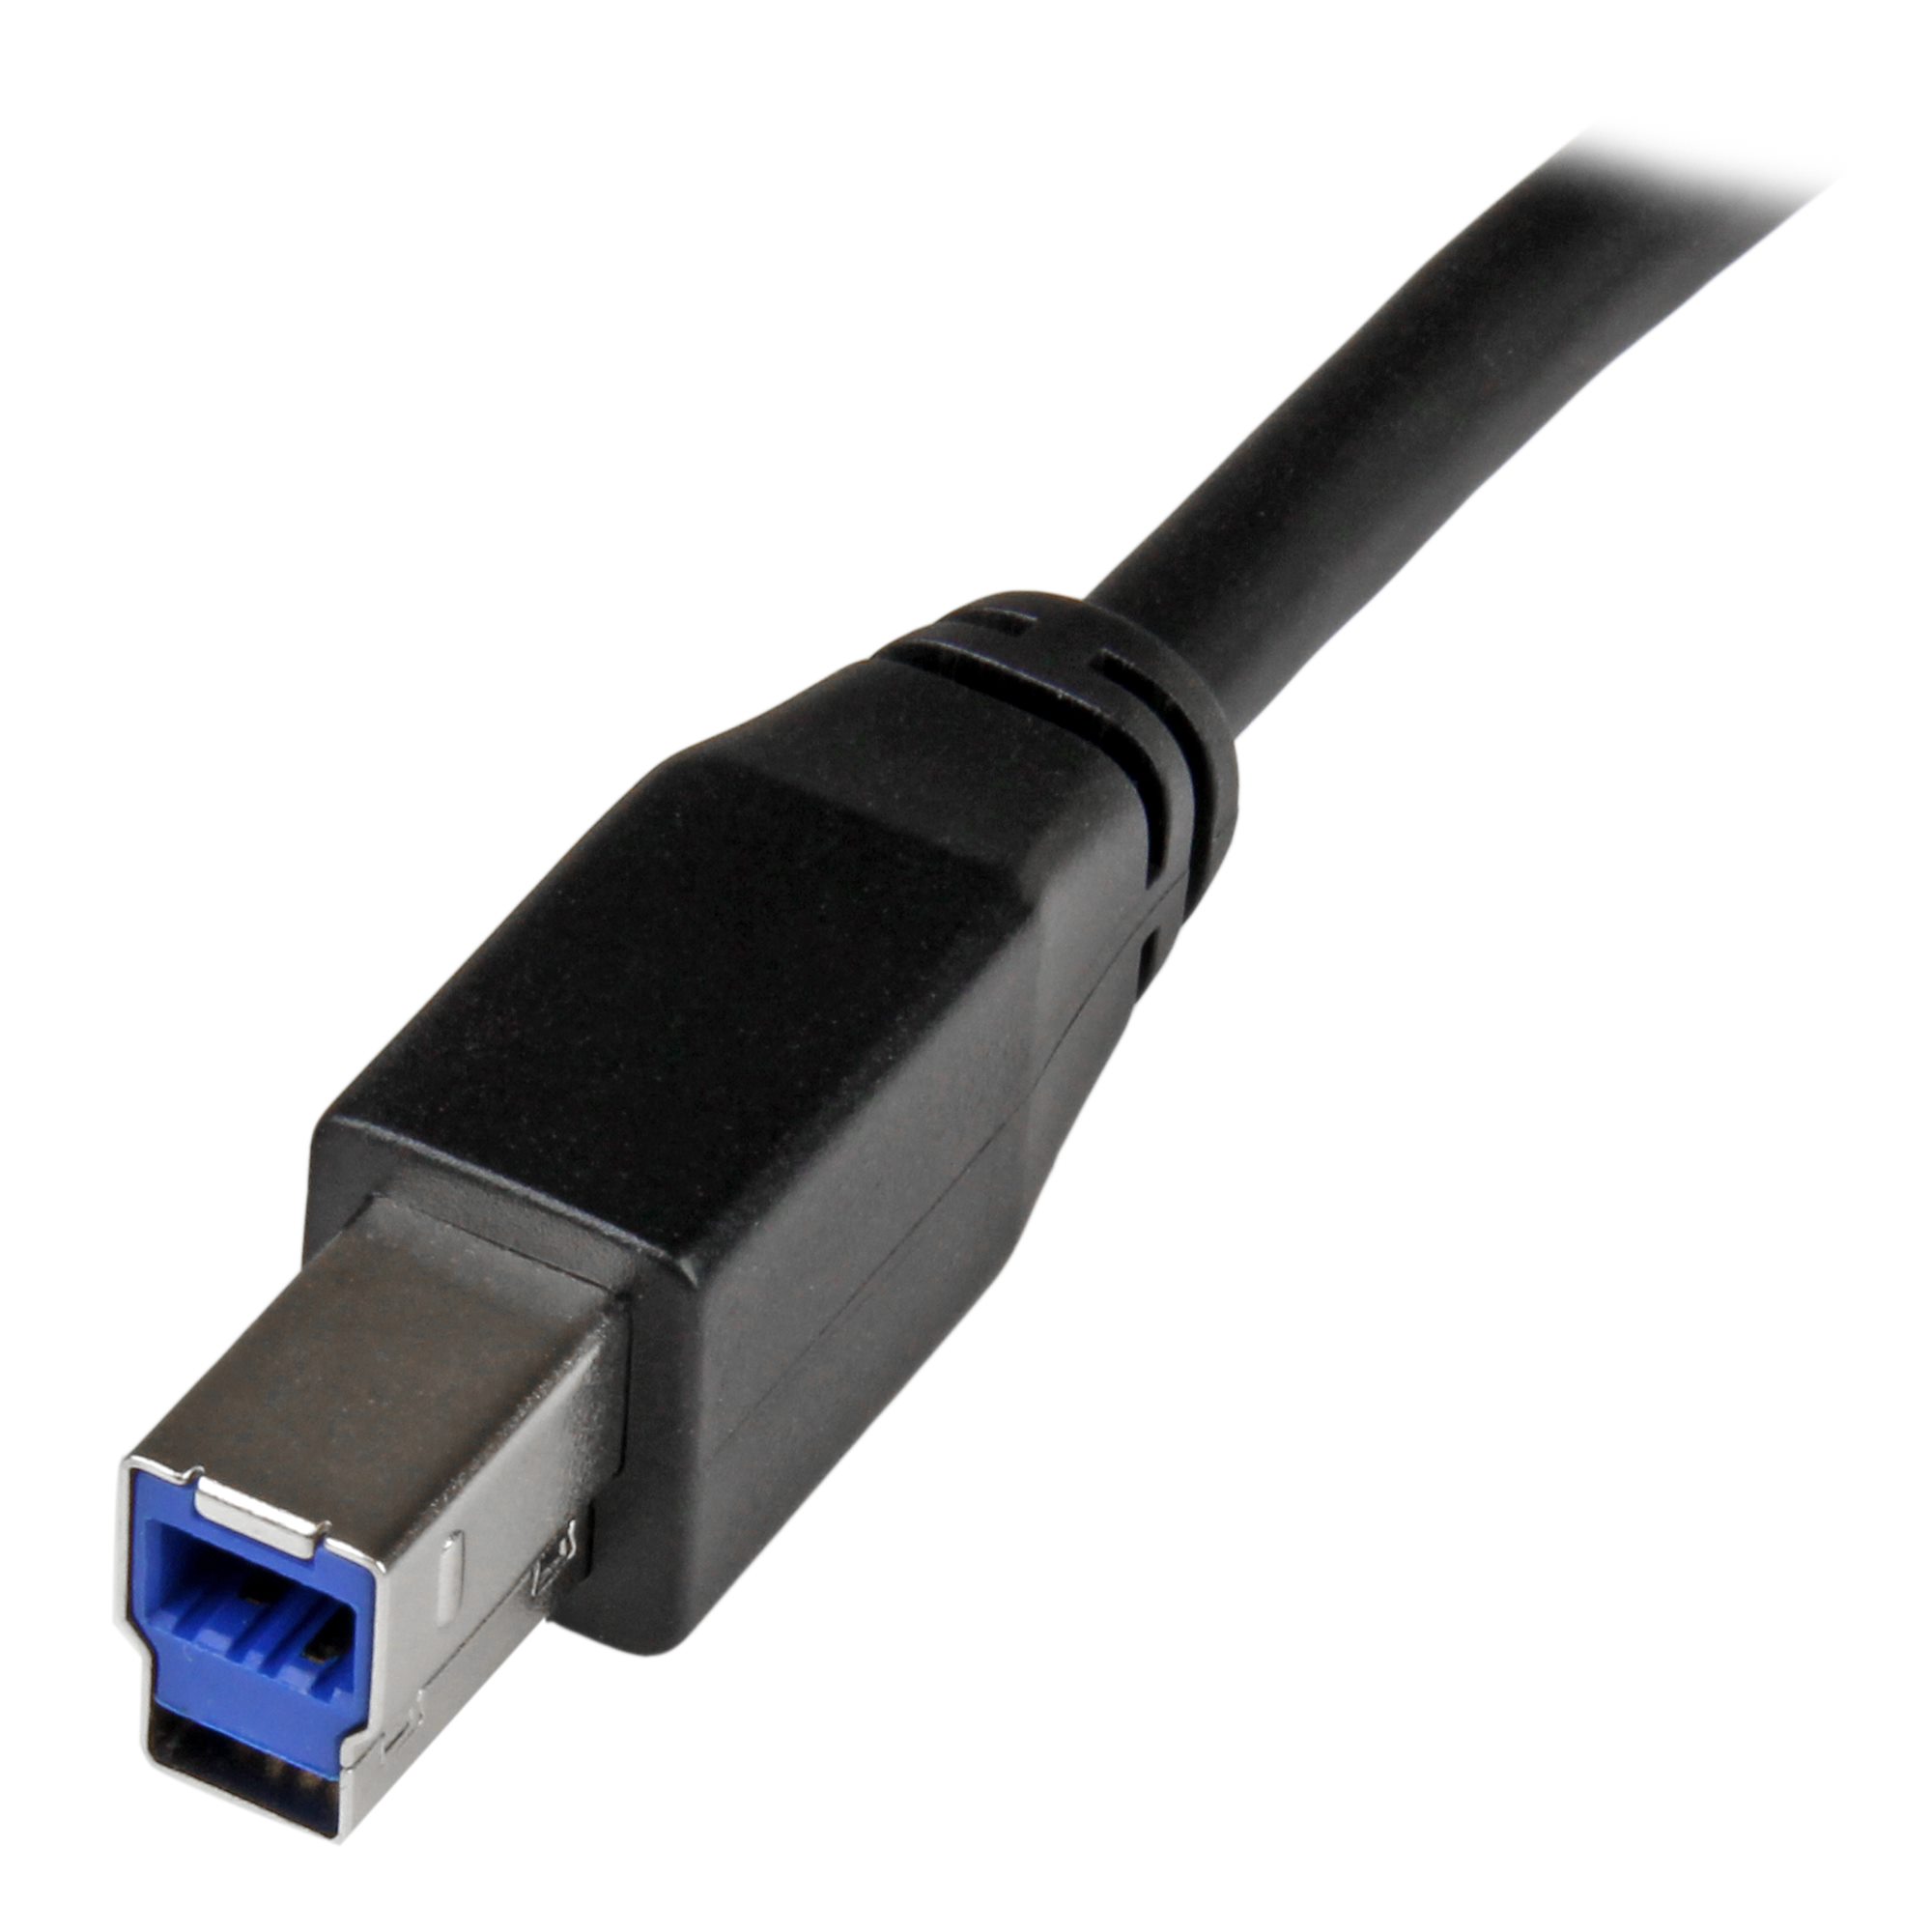 kan niet zien pariteit cursief 15ft Active USB 3.0 USB-A to USB-B Cable - USB 3.0 Cables | StarTech.com